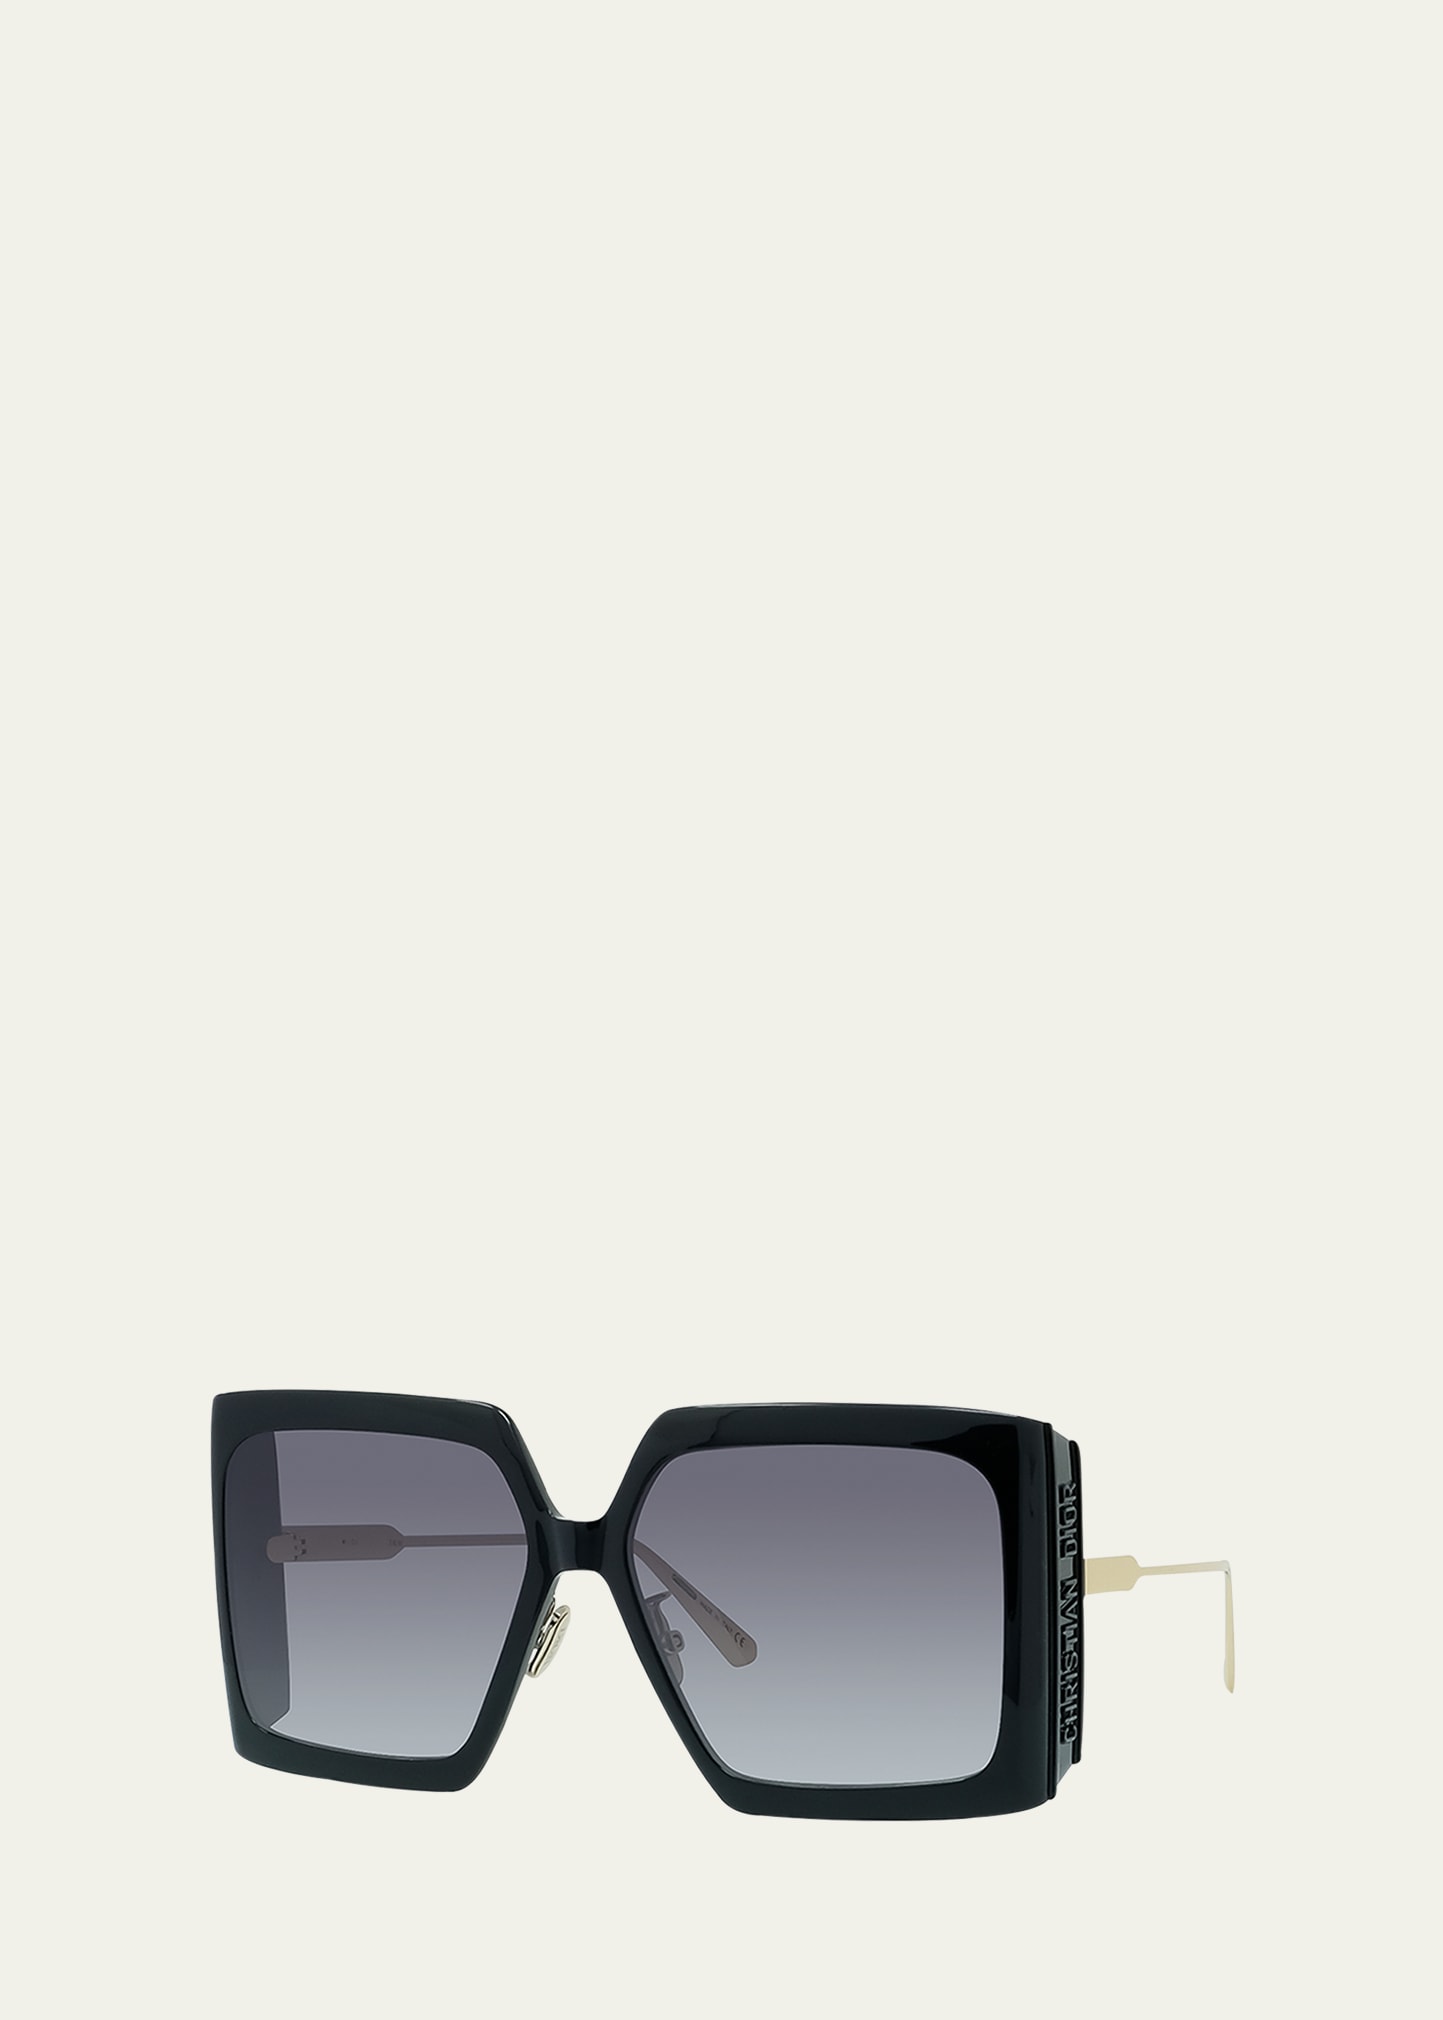 Dior DiorsSolar S2U 59mm Oversized Square Injection Plastic Sunglasses